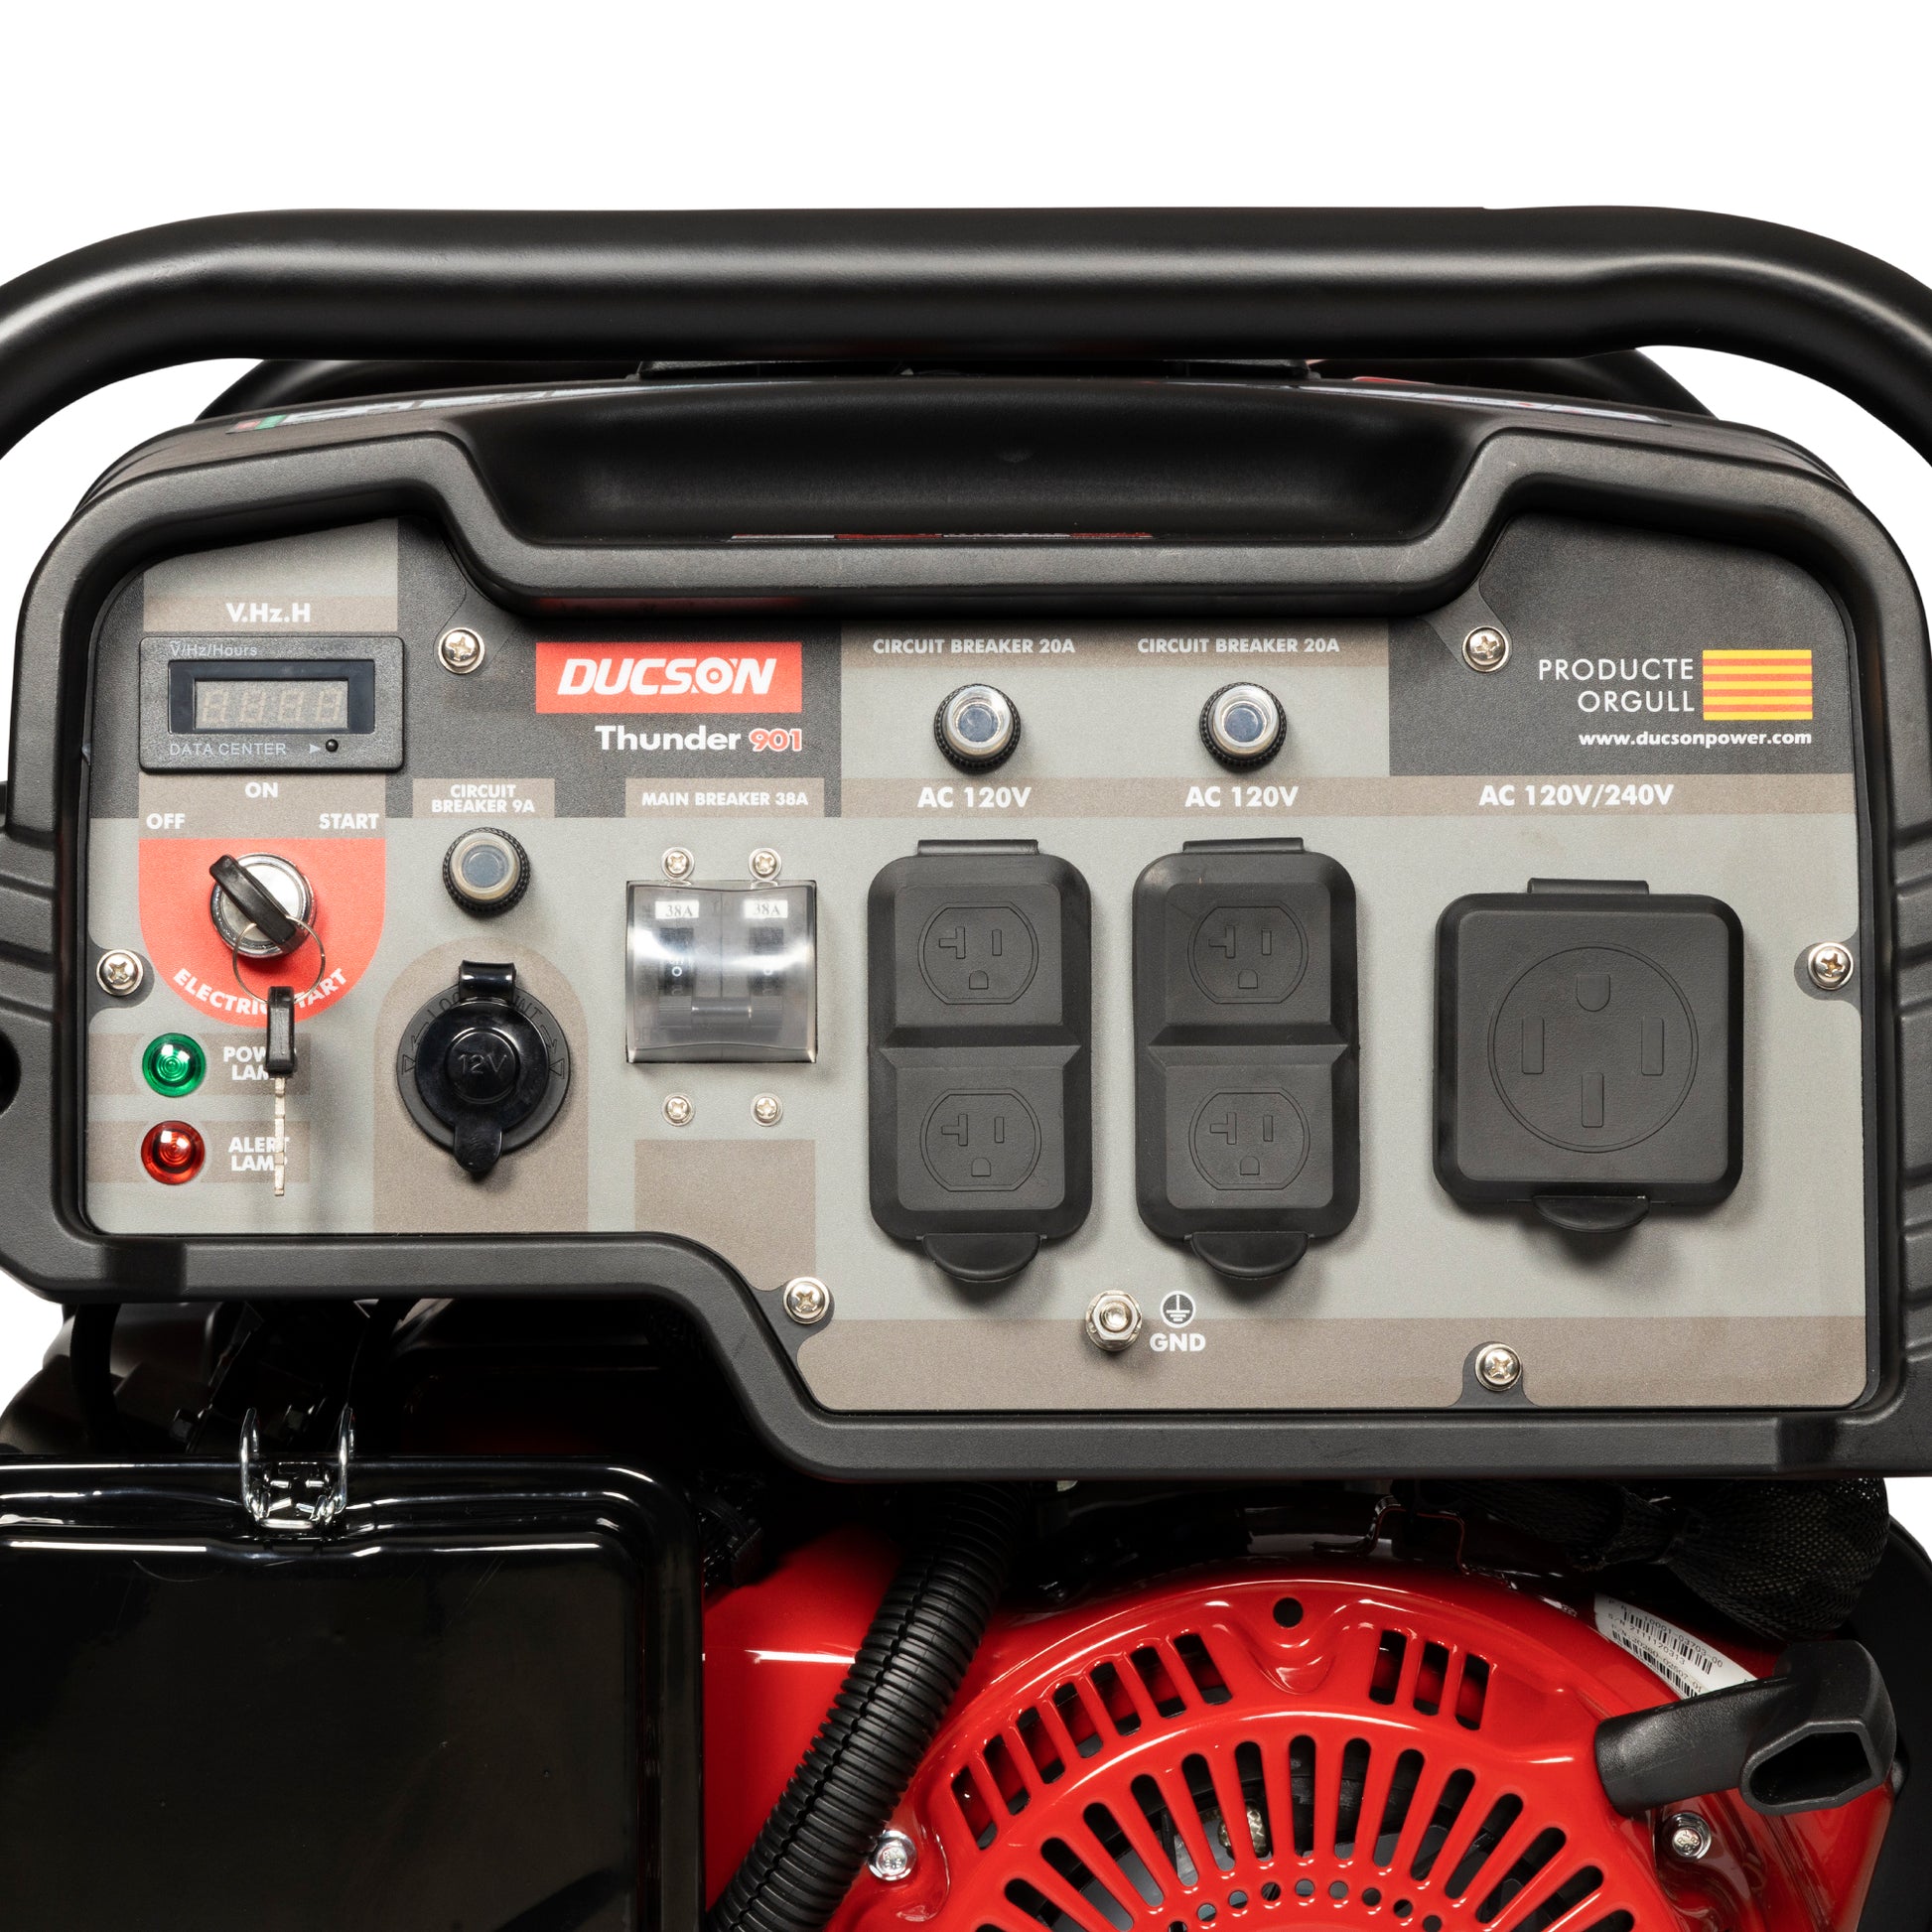 Generador eléctrico a gasolina 18 Hp 4T 45 litros Ref. 123-A DUCSON – Tool  Store